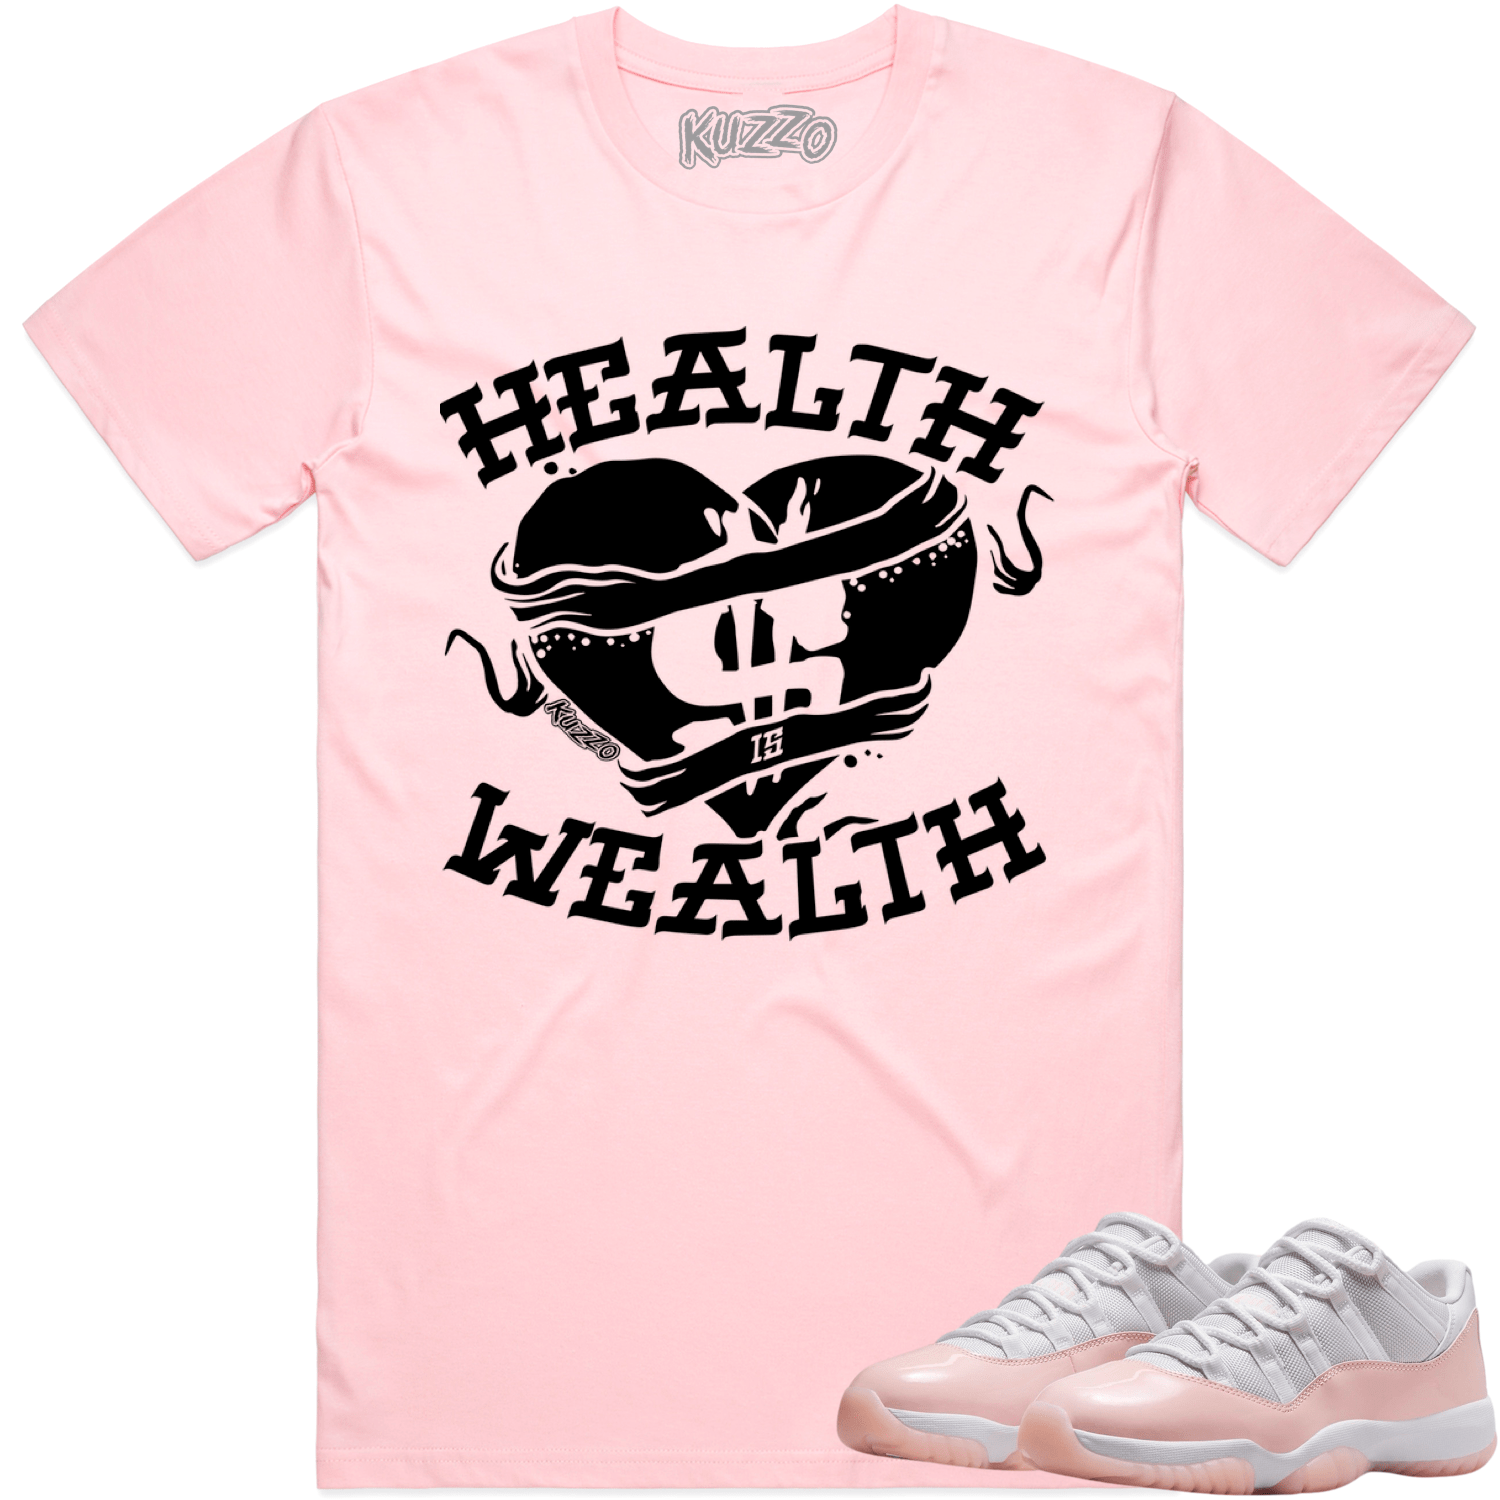 Legend Pink 11s Shirt - Jordan 11 Low Pink Sneaker Tees - Health